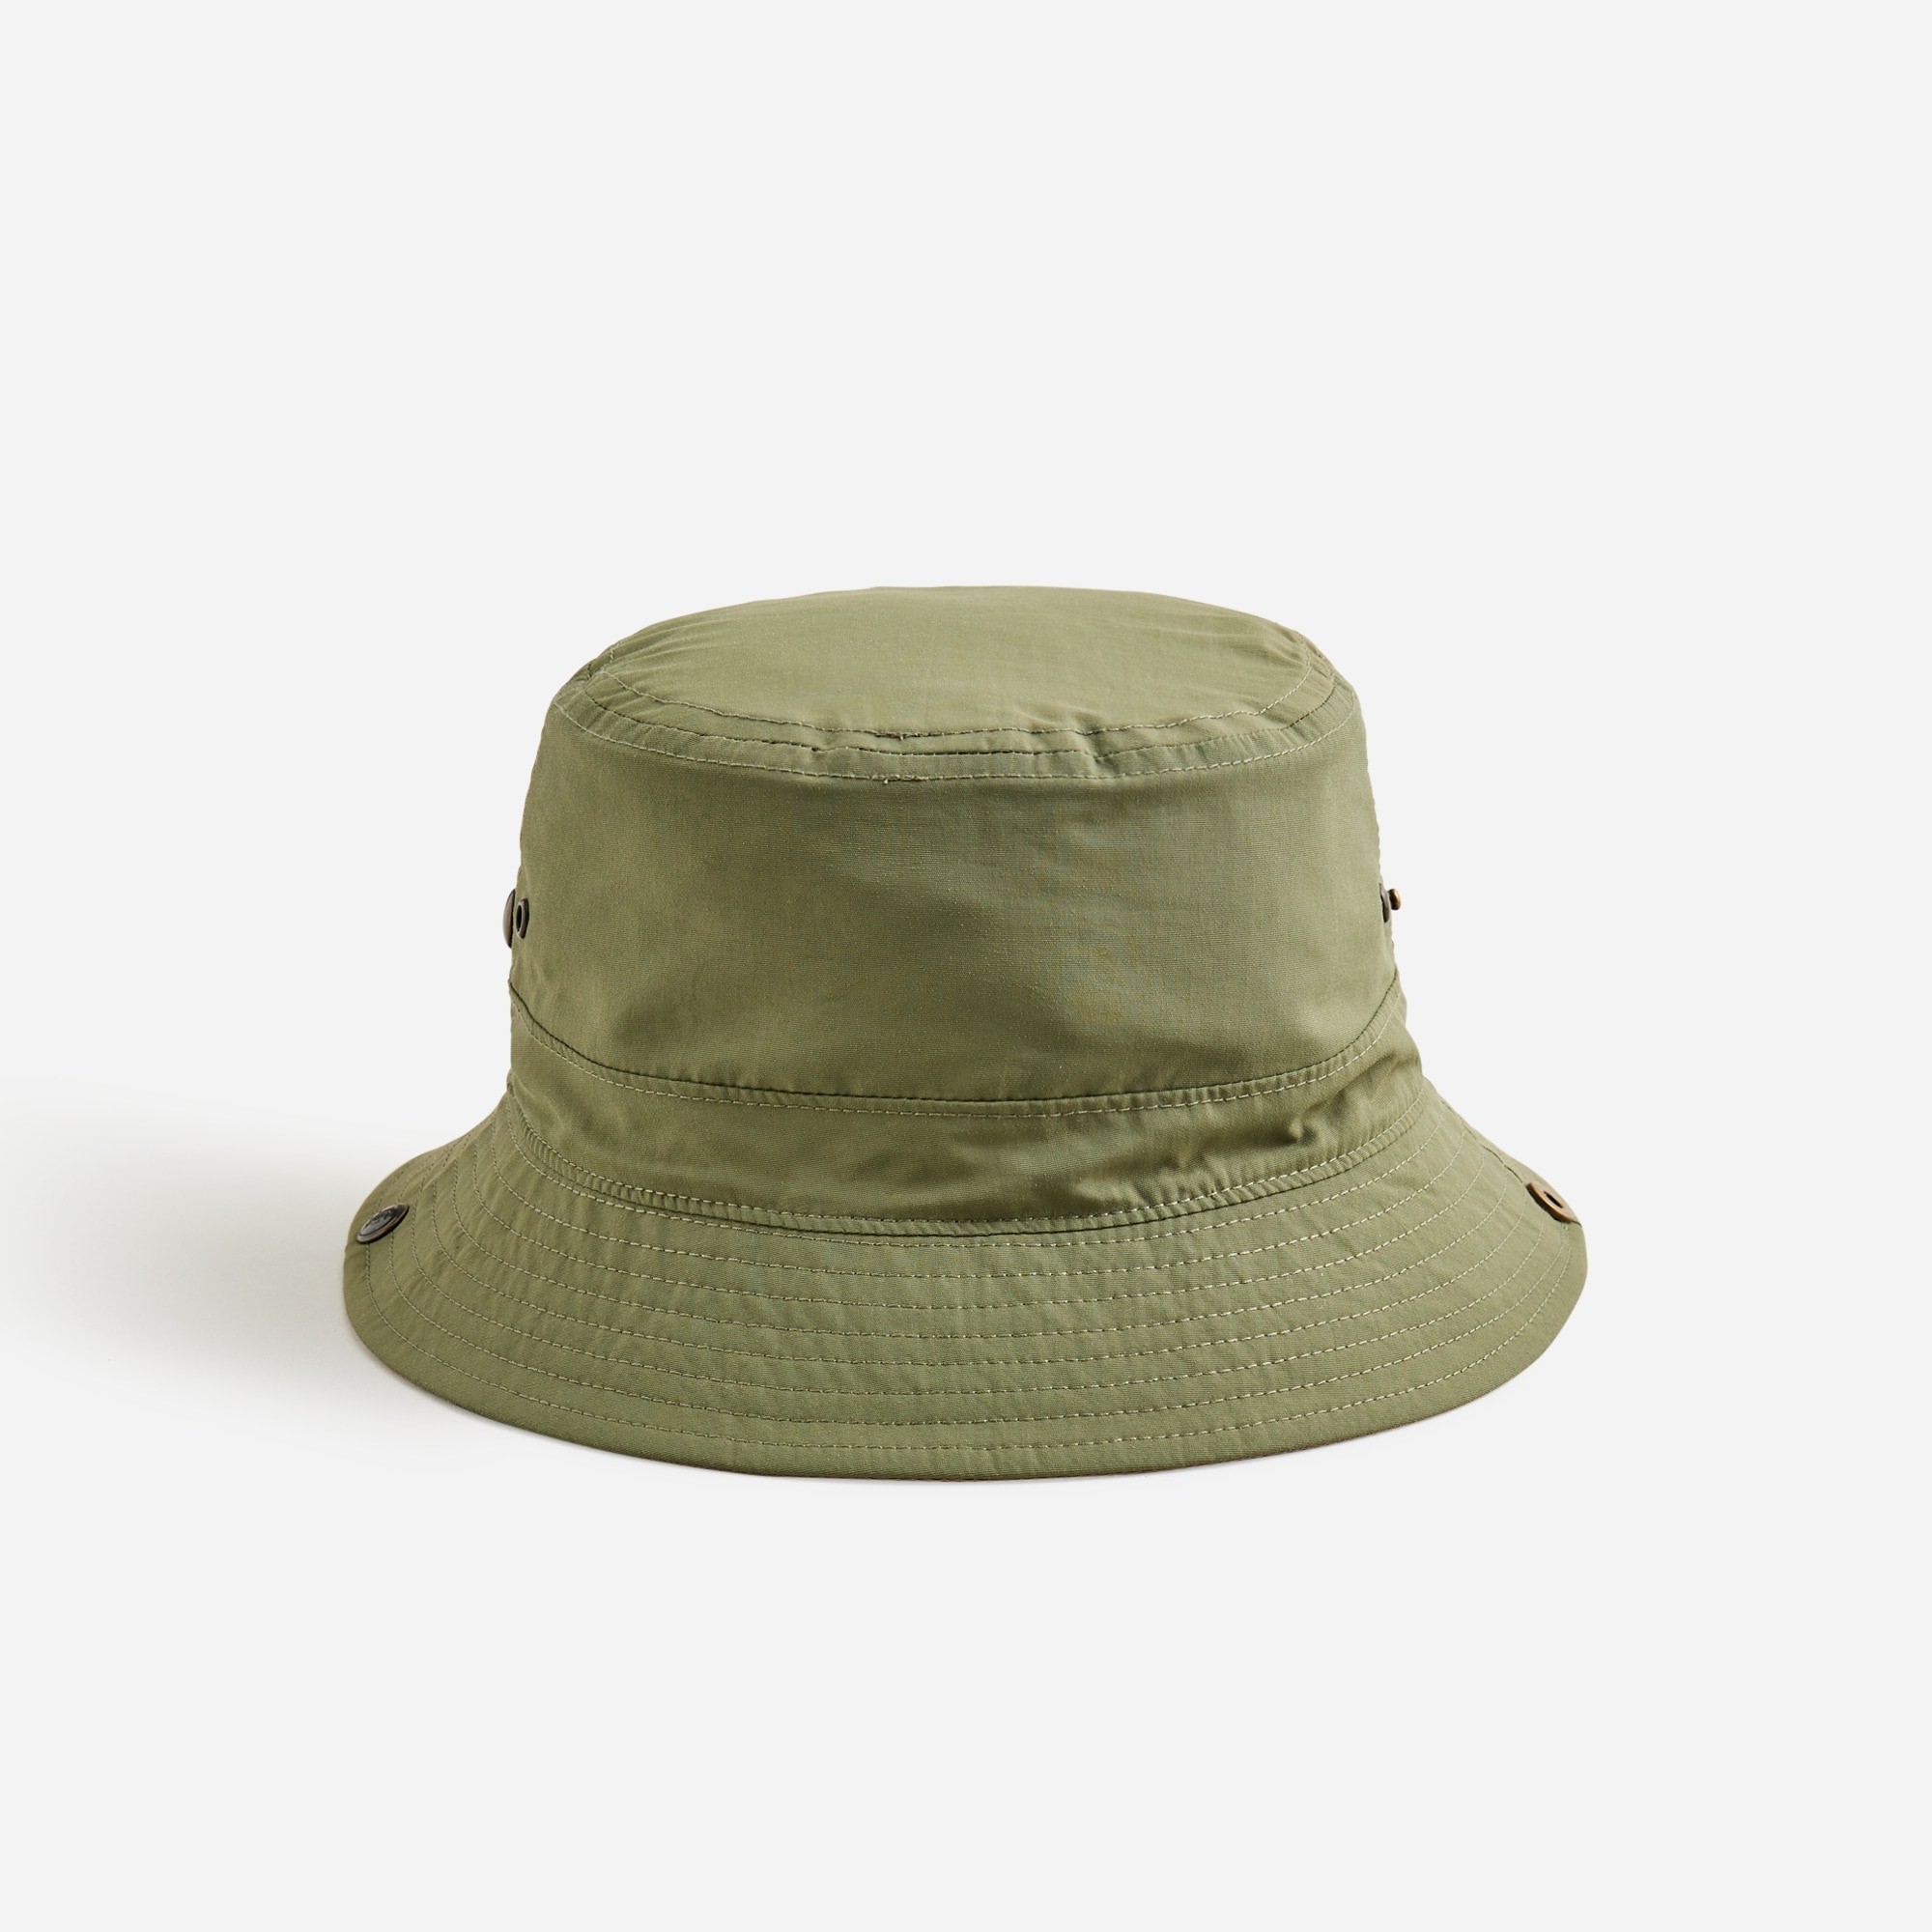 Jcrew Reversible bucket hat in taslan nylon